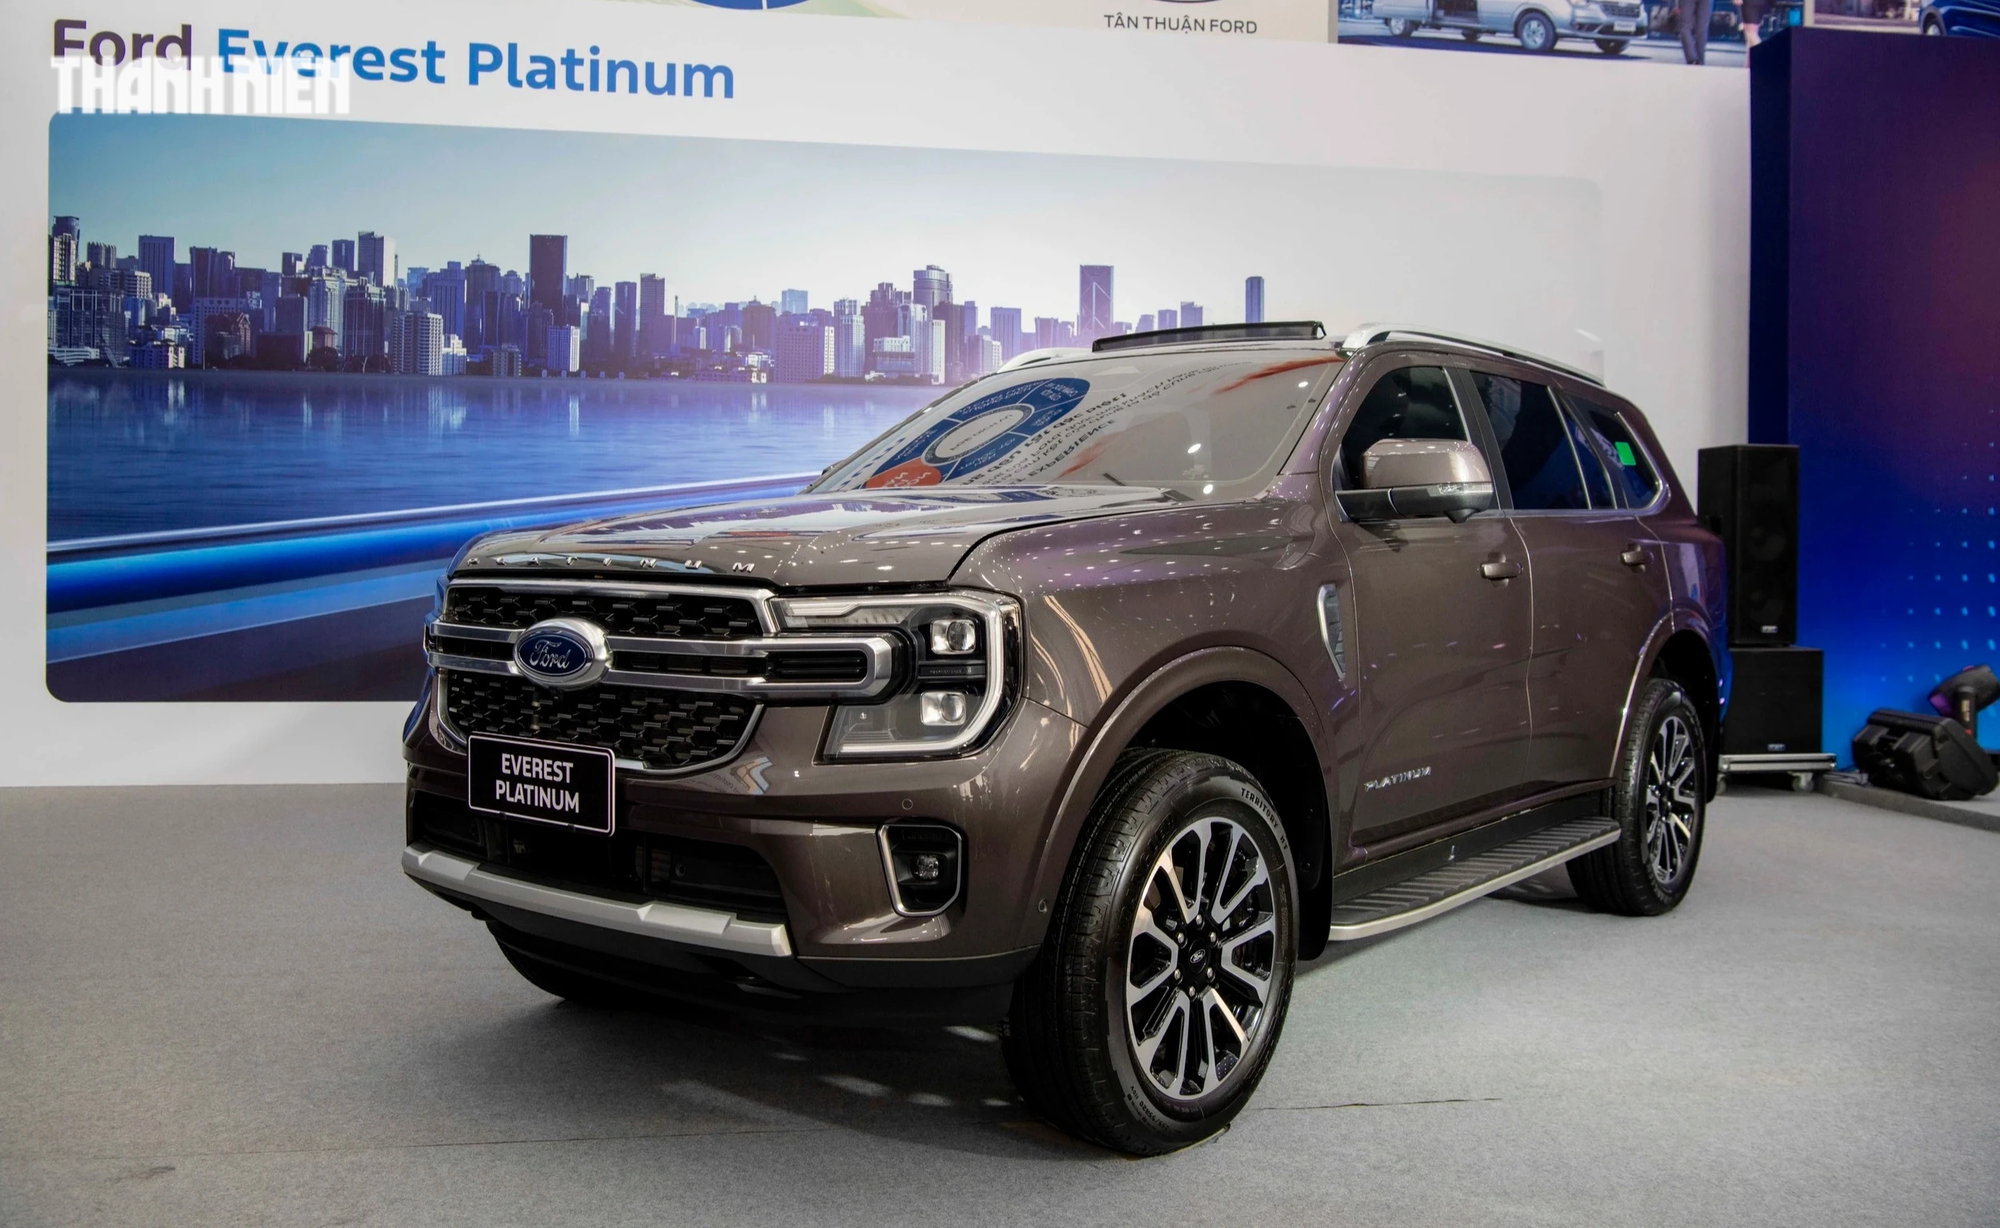 Ford Everest phiên bản Platinum có giá 1,545 tỉ đồng